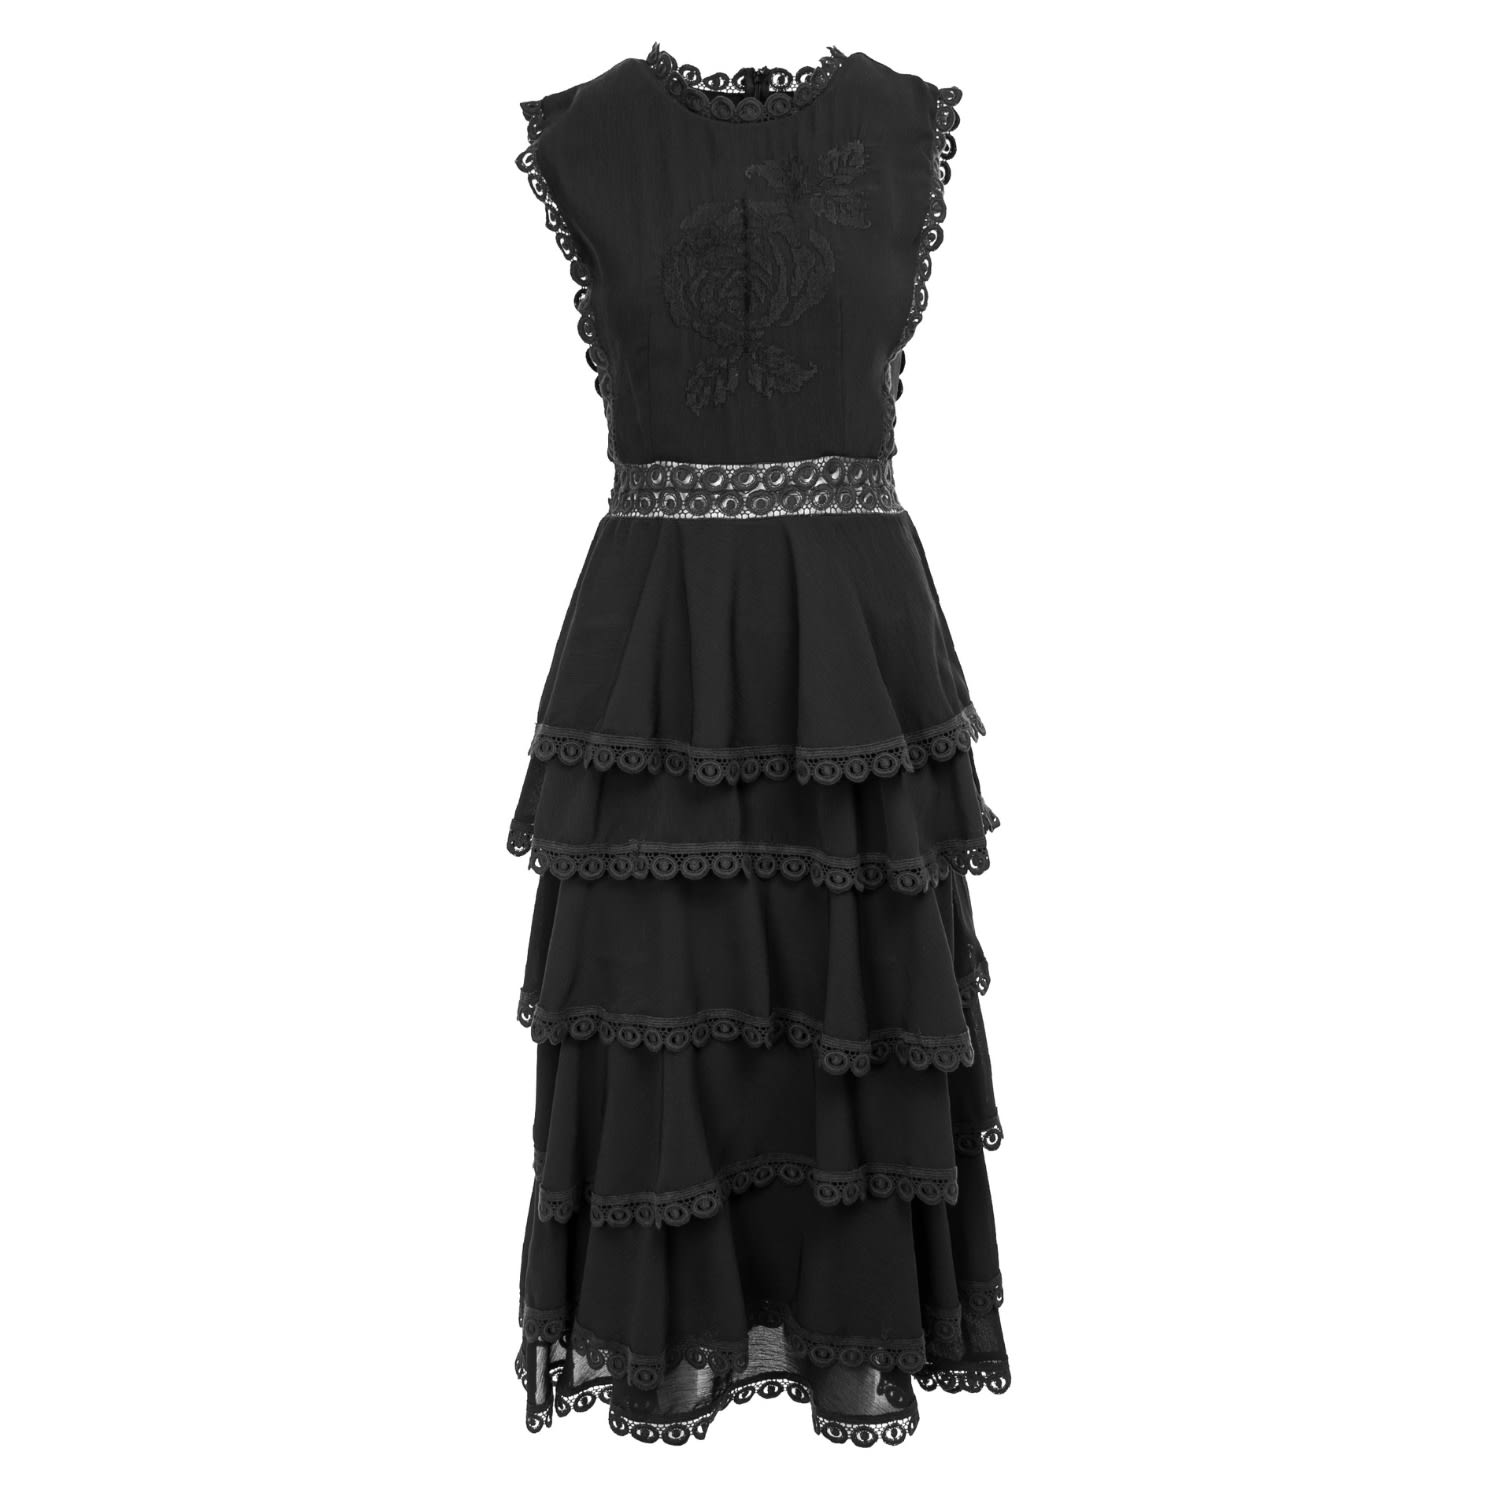 Women’s Long Black Dress With Ruffles And Lace Appliqué Extra Large Izabela Mandoiu